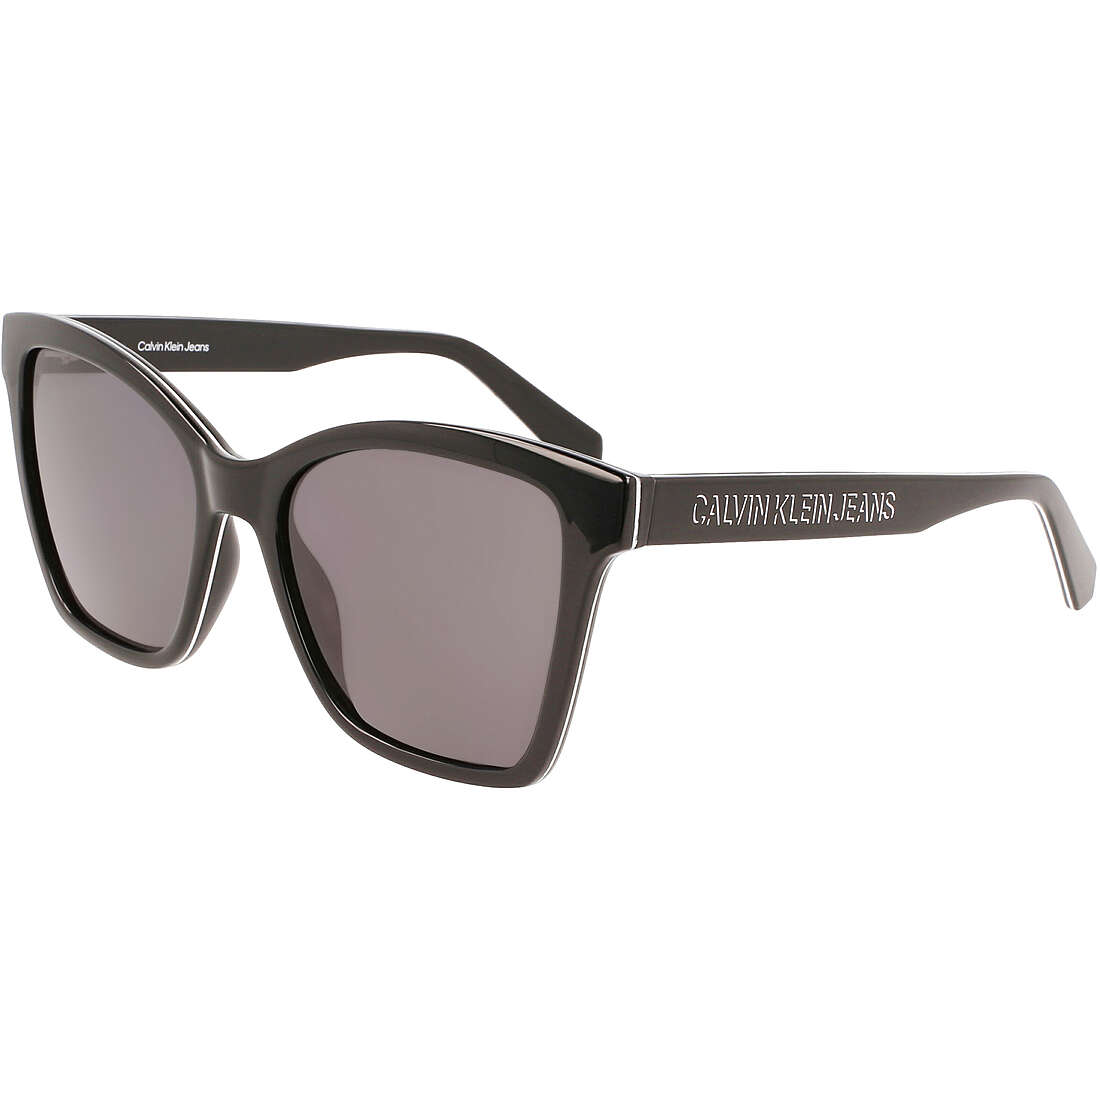 sunglasses woman Calvin Klein Jeans 594525518001